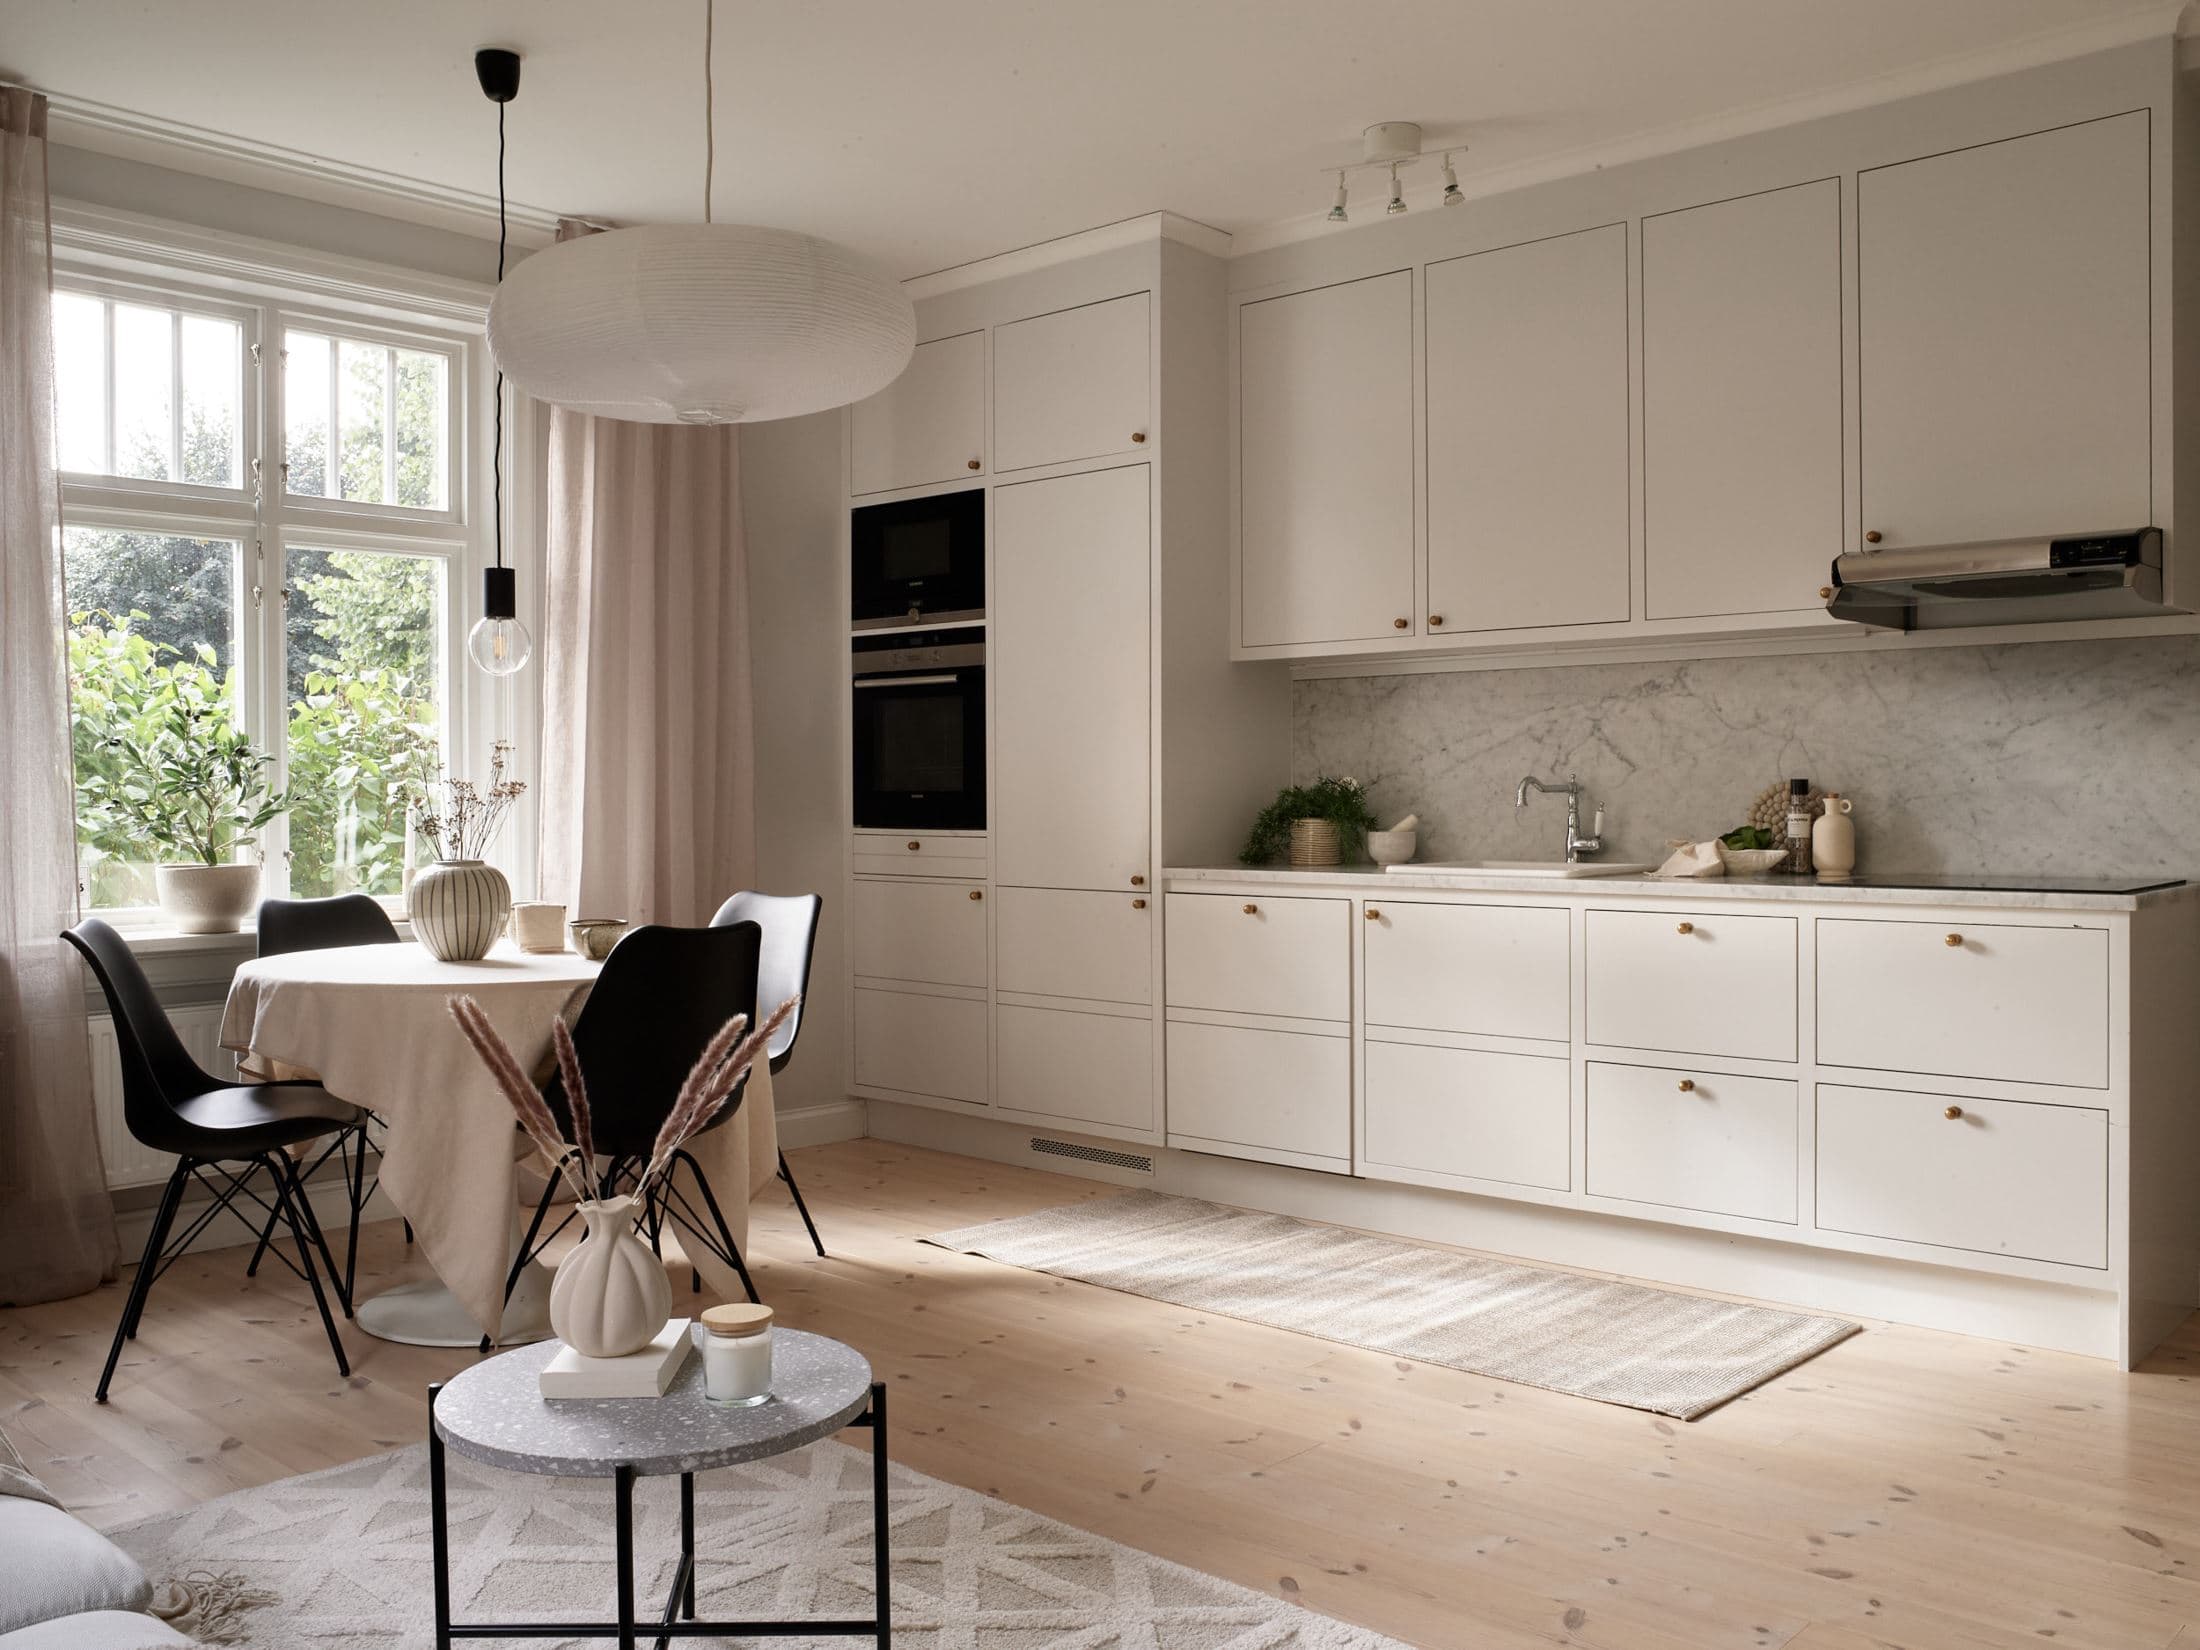 Grey walls, beige tones, and an elegant white kitchen - COCO LAPINE ...